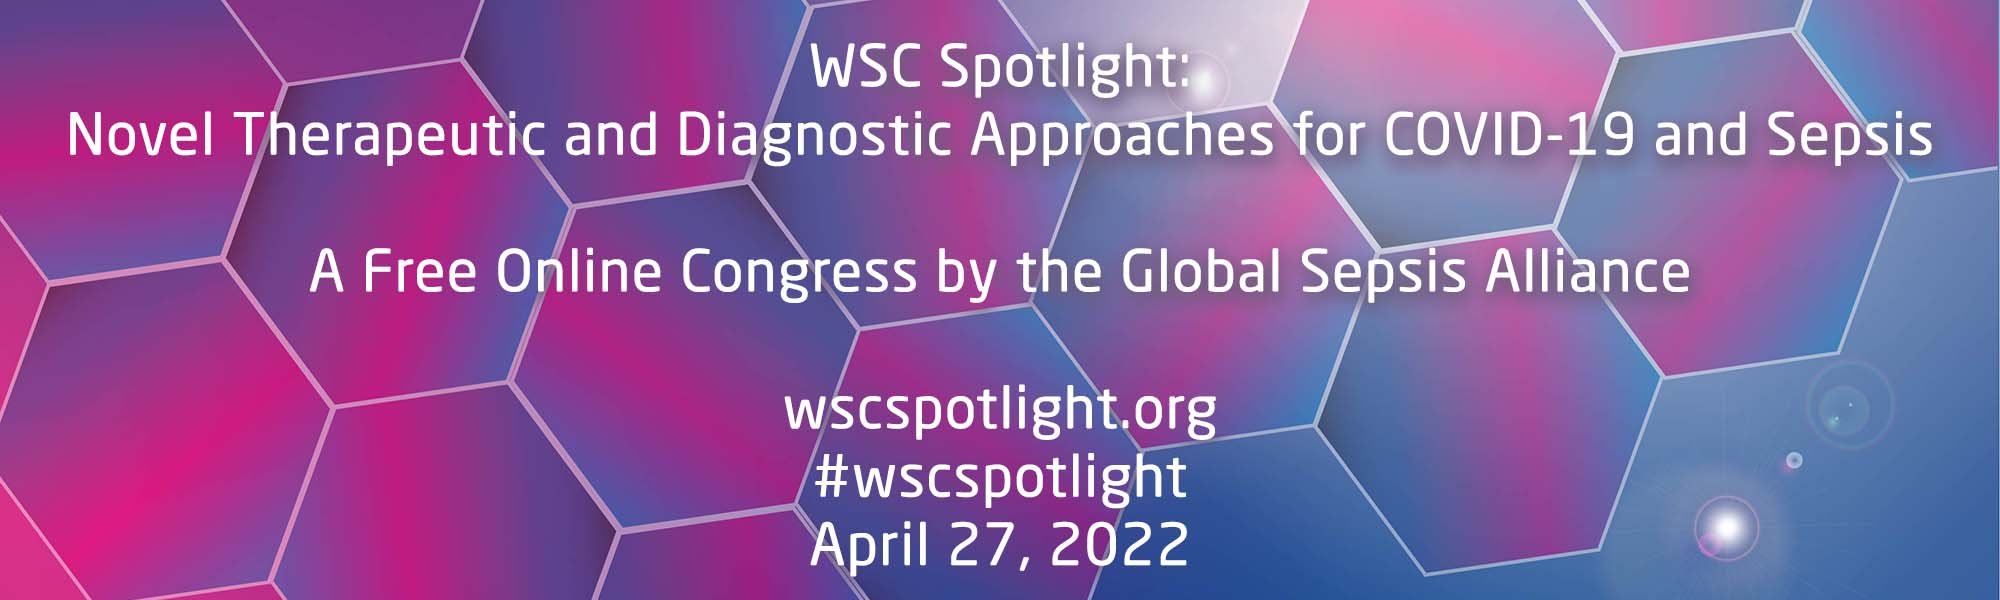 Registrations Now Open for the 2022 WSC Spotlight on April 27, 2022 — Global Sepsis Alliance